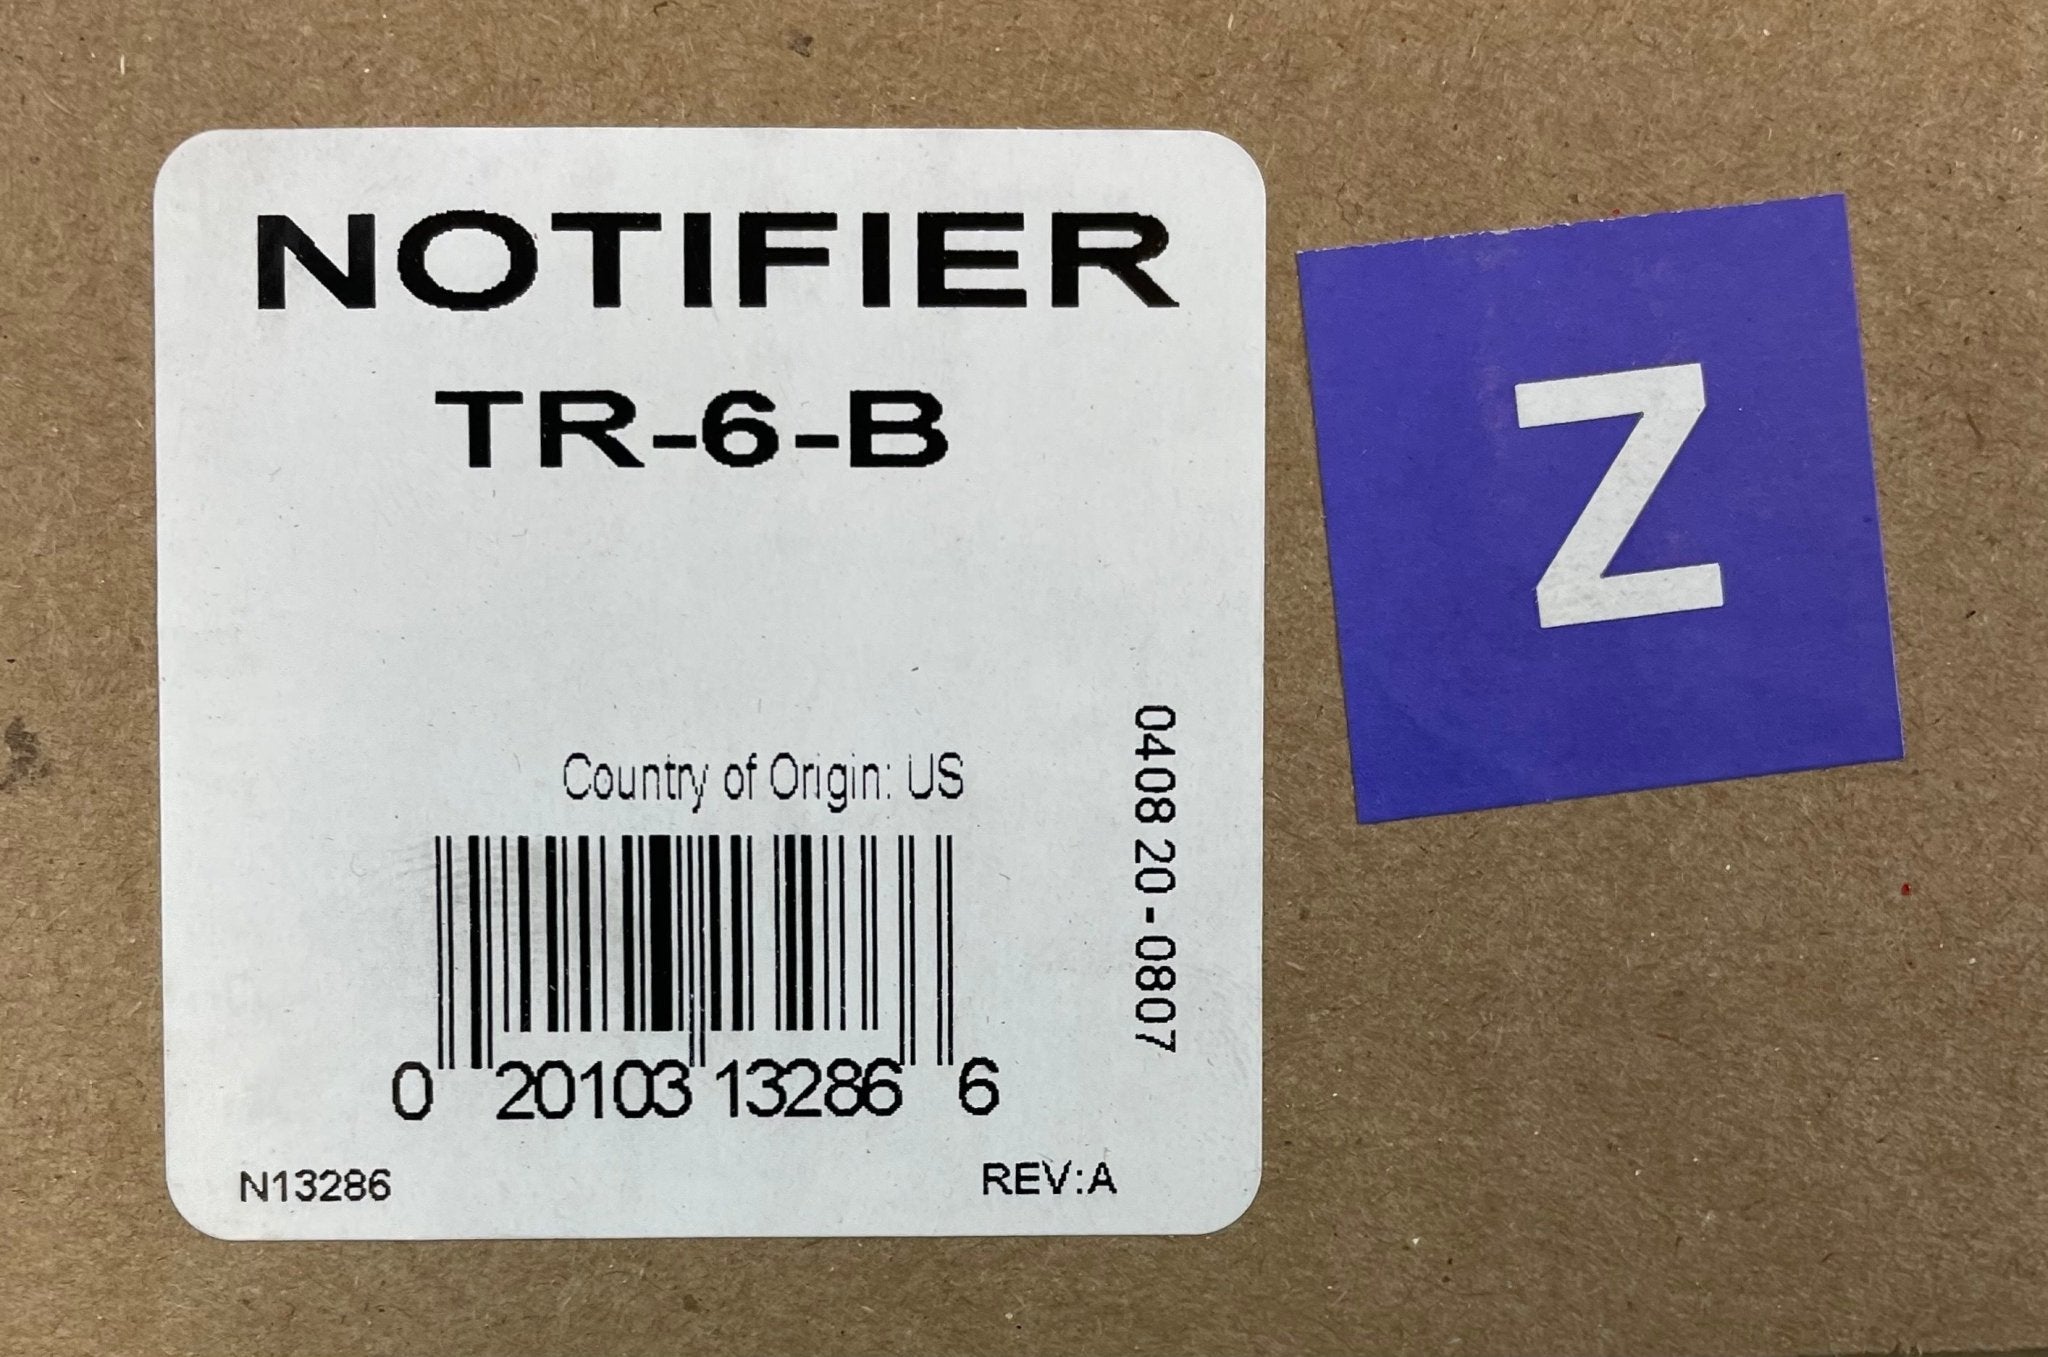 Notifier TR-6-B - The Fire Alarm Supplier